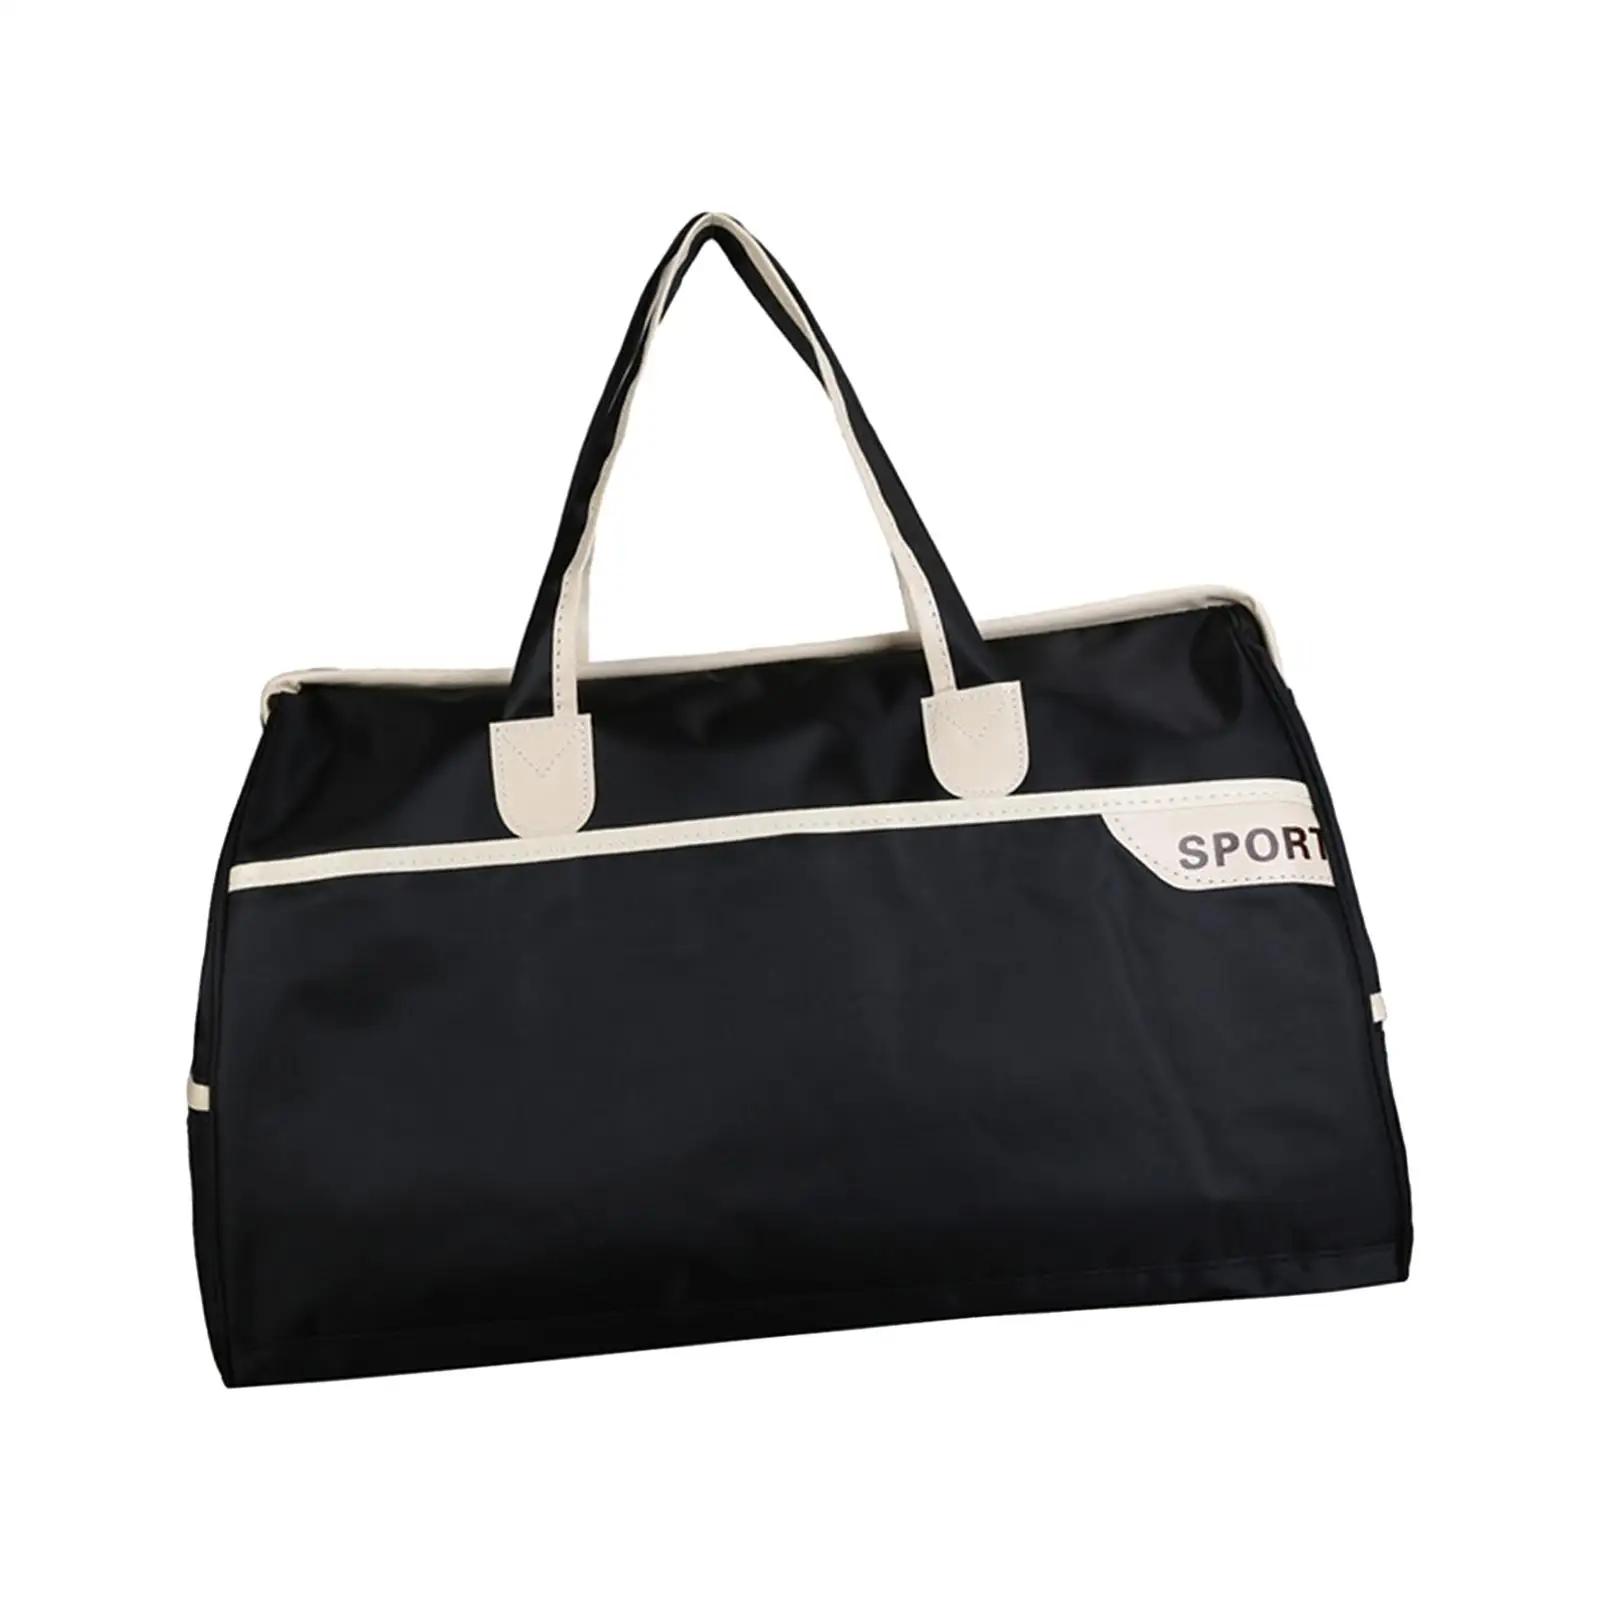 Sports Gym Bag Multipurpose Carry on Organizer Shoulder Bag Folding Travel Duffel Tote Bag for Picnic Exercise Trip Yoga Outddor